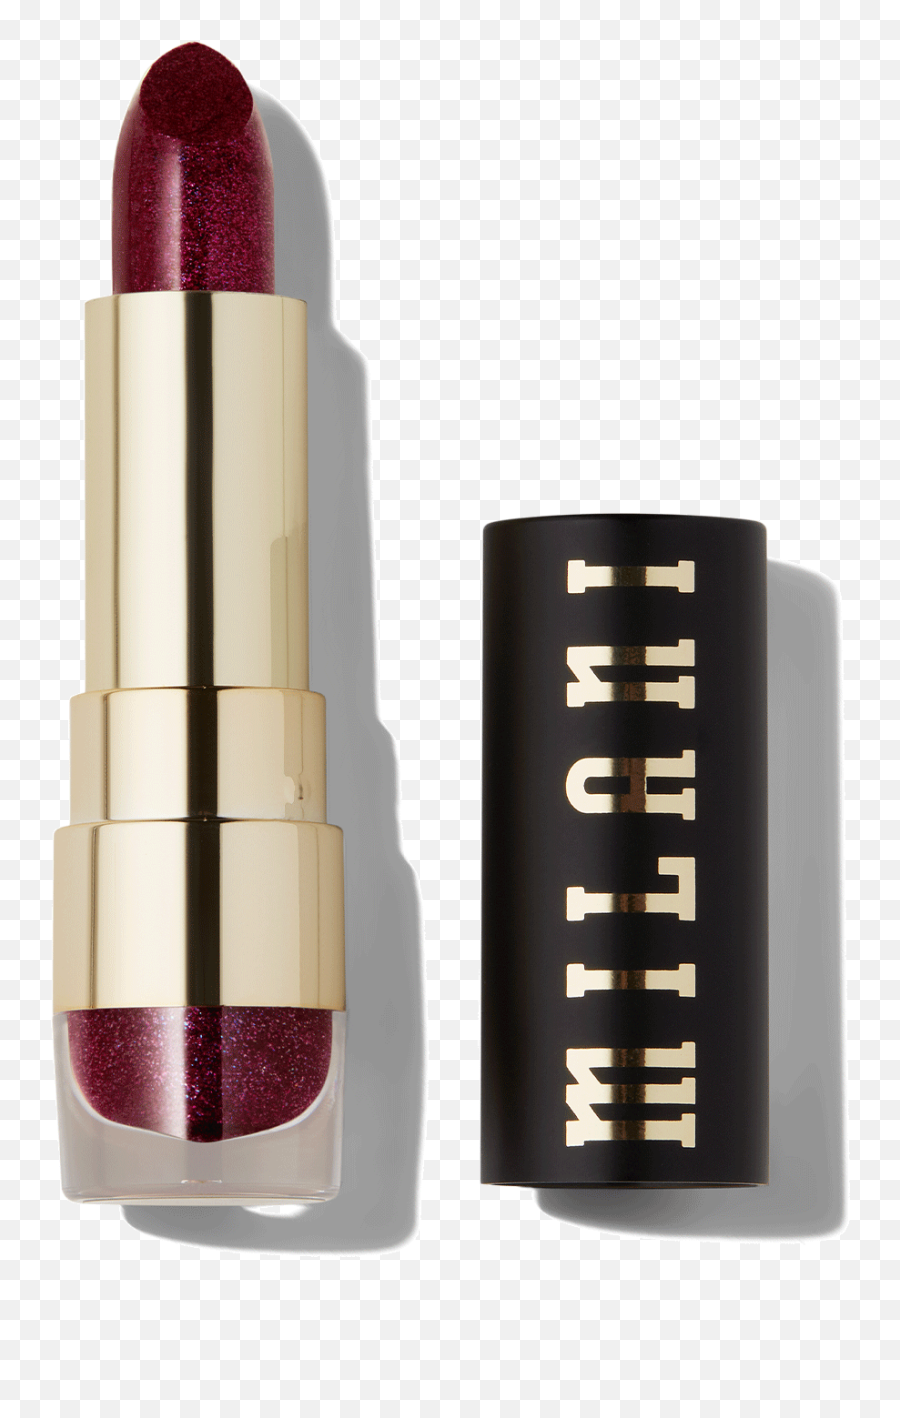 Milani Metallic Shimmer Lipstick Sticks And Spells Emoji,Emotion Shown By Lips